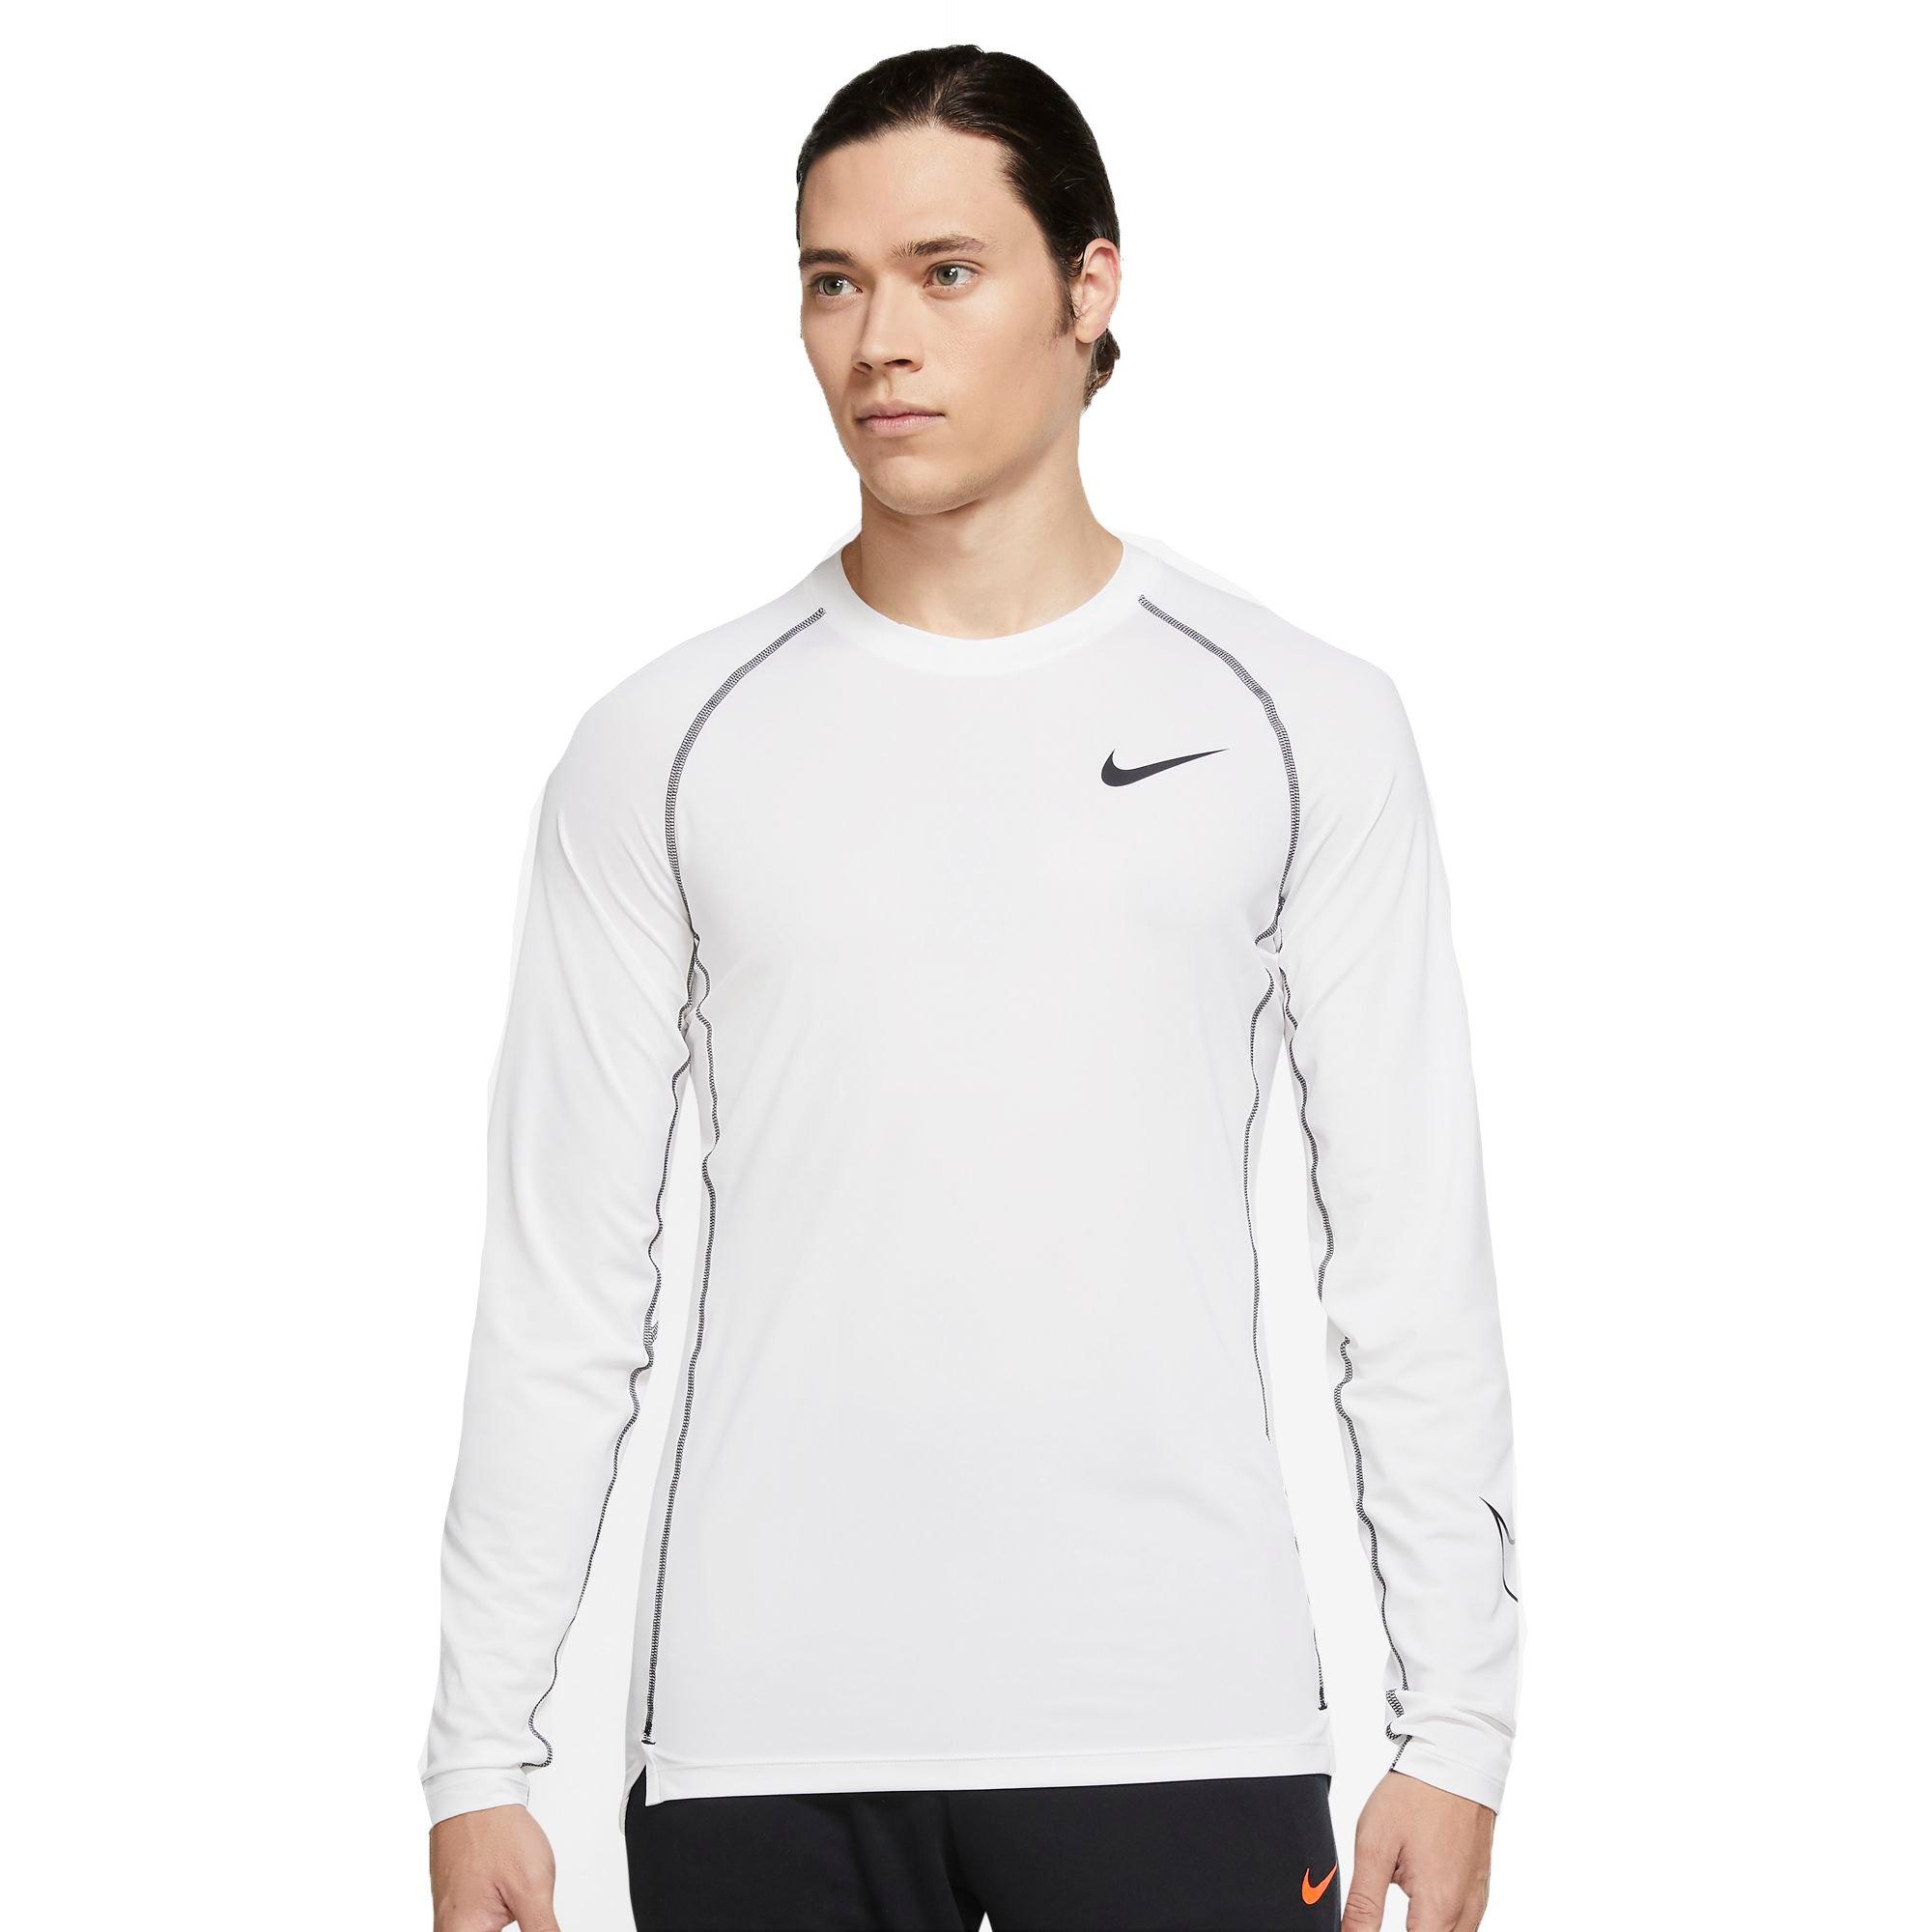 Den aktuelle Tilbageholdelse overskud Nike Men's Pro Dri-FIT Slim Fit Long-Sleeve "White" Top